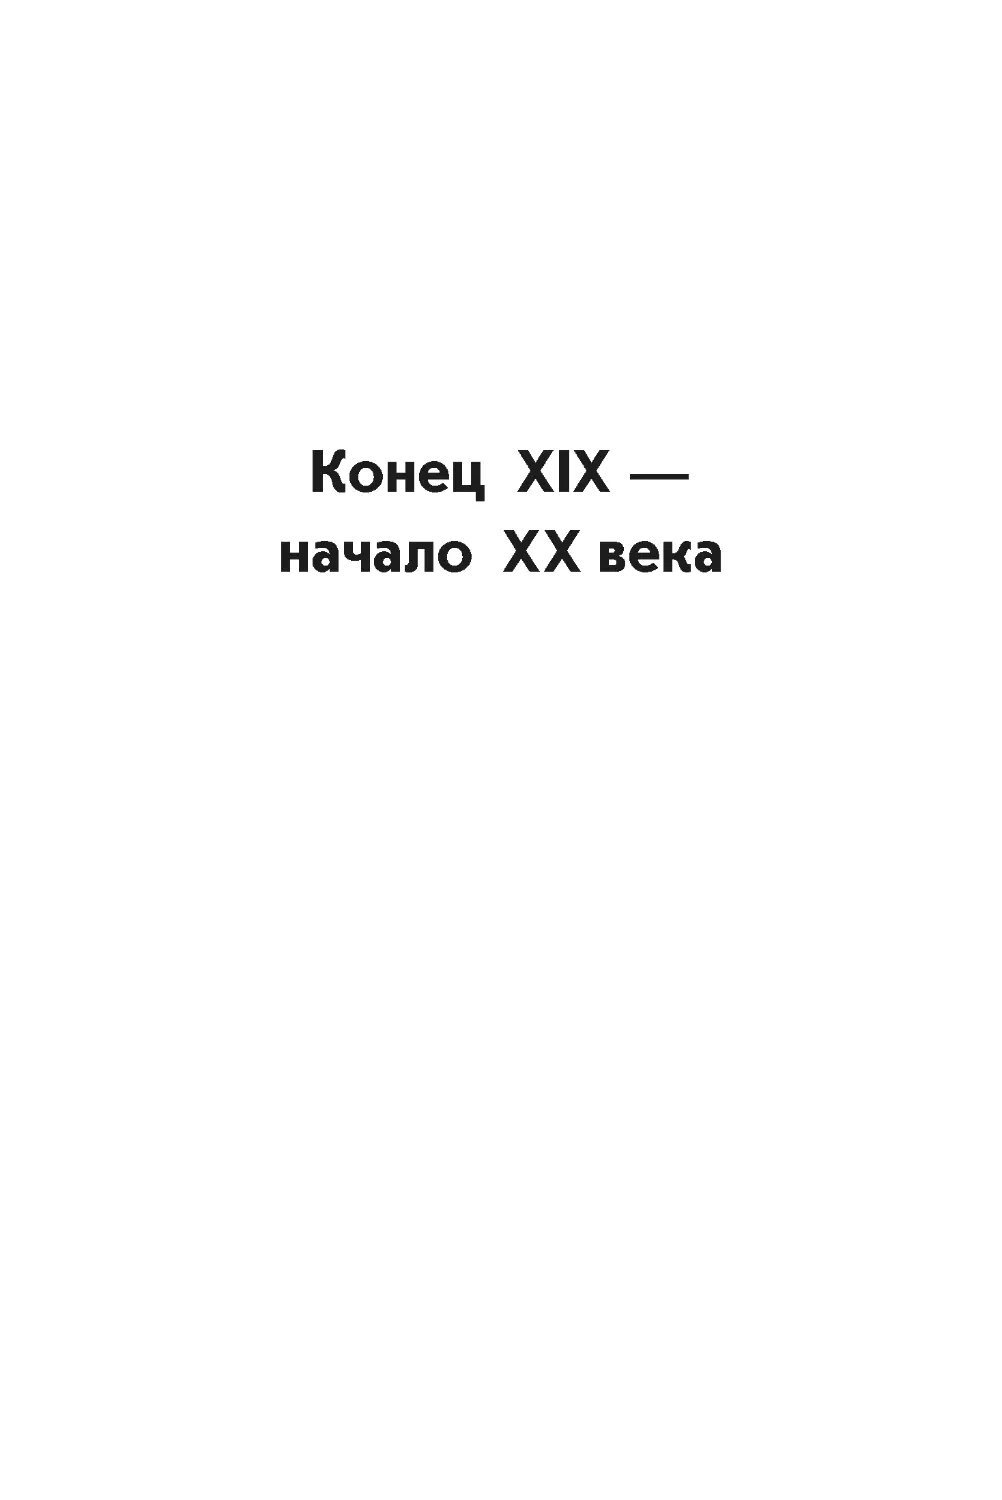 КОНЕЦ XIX — НАЧАЛО ХХ ВЕКА